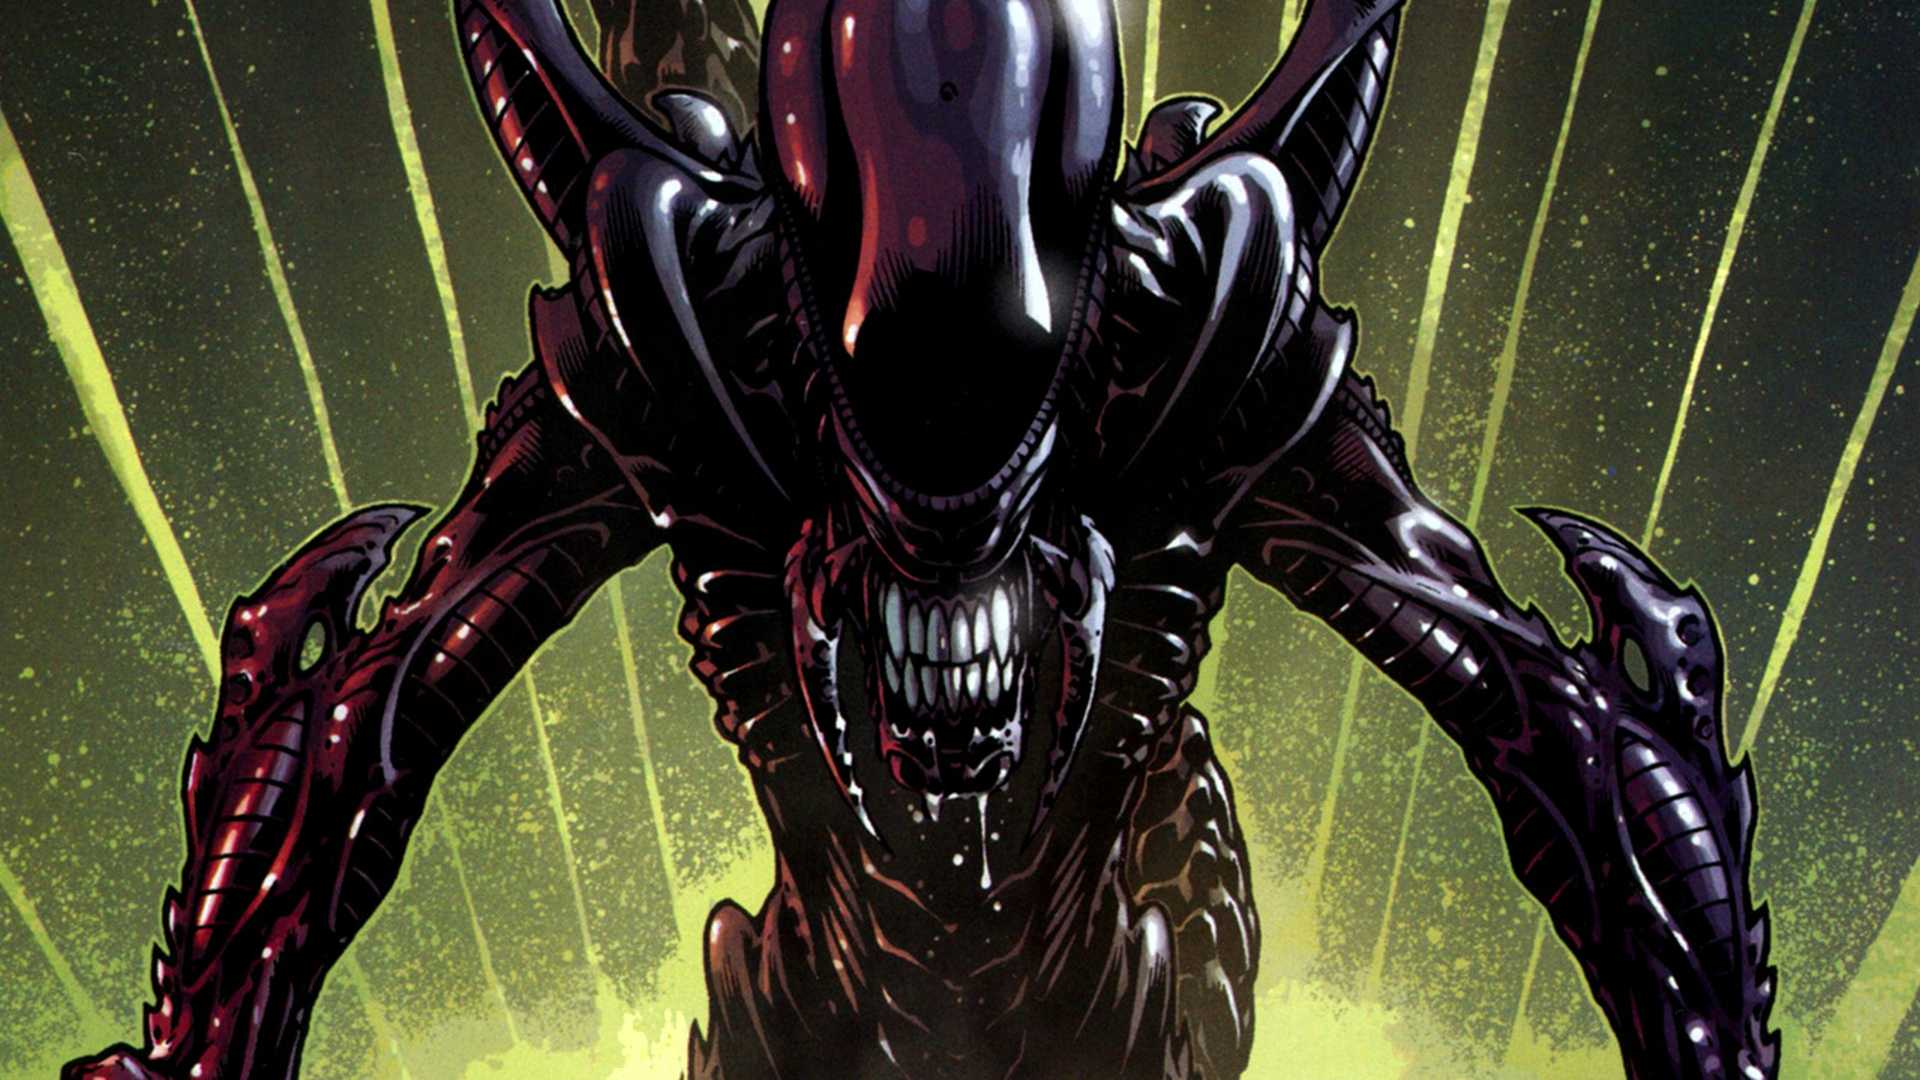 Alien Wallpaper - Predator Alien Comic Book Cover - HD Wallpaper 